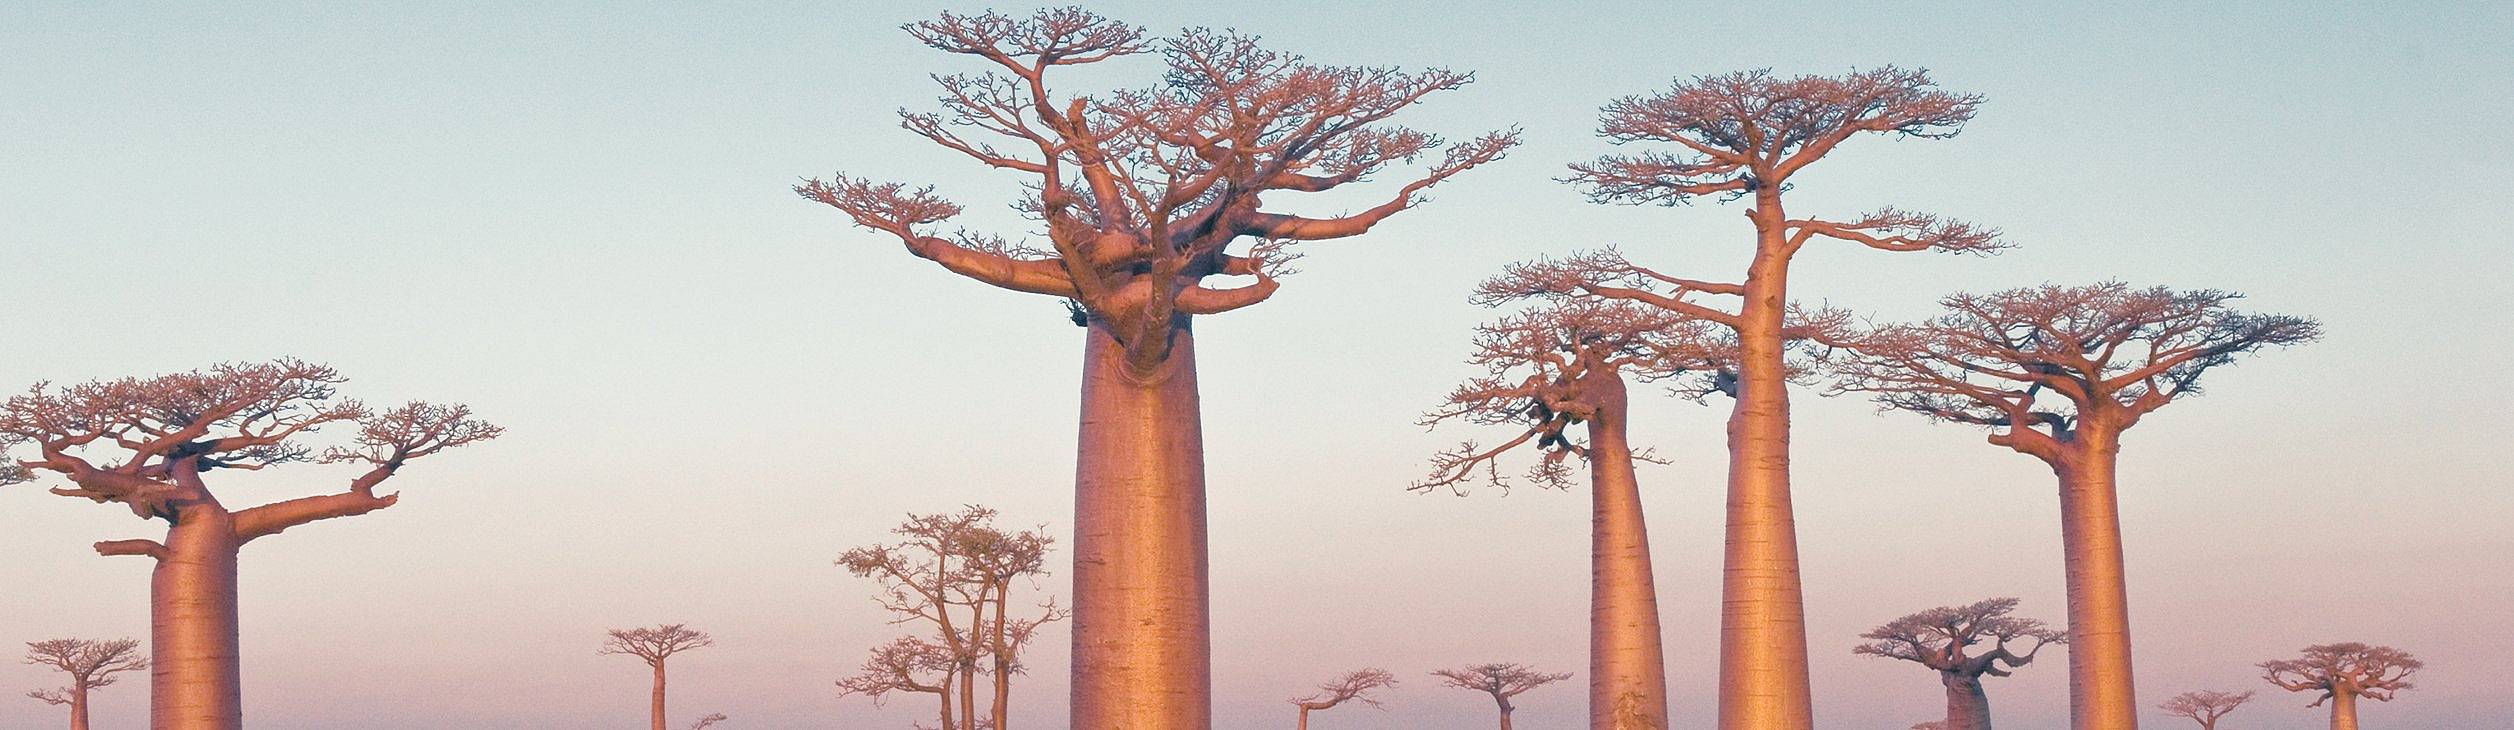 Group of baobab trees, Madagascar